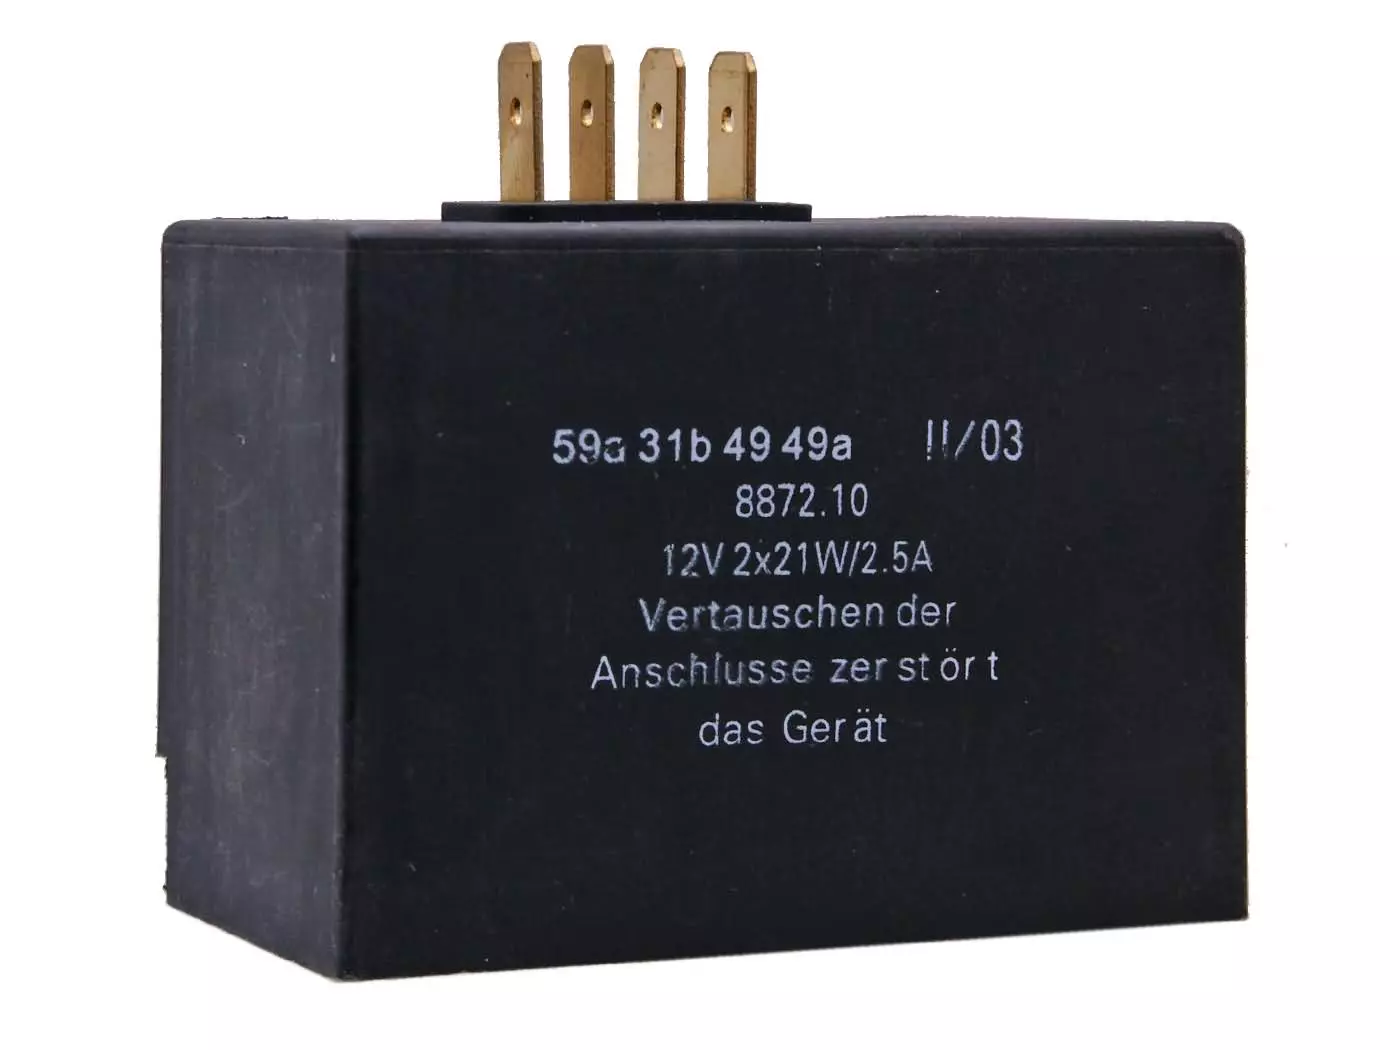 Spanningsregelaar / Knipperlicht relais 12V 2x21W, 2,5A voor Simson S51, S52, S70, S83, SR50, SR80